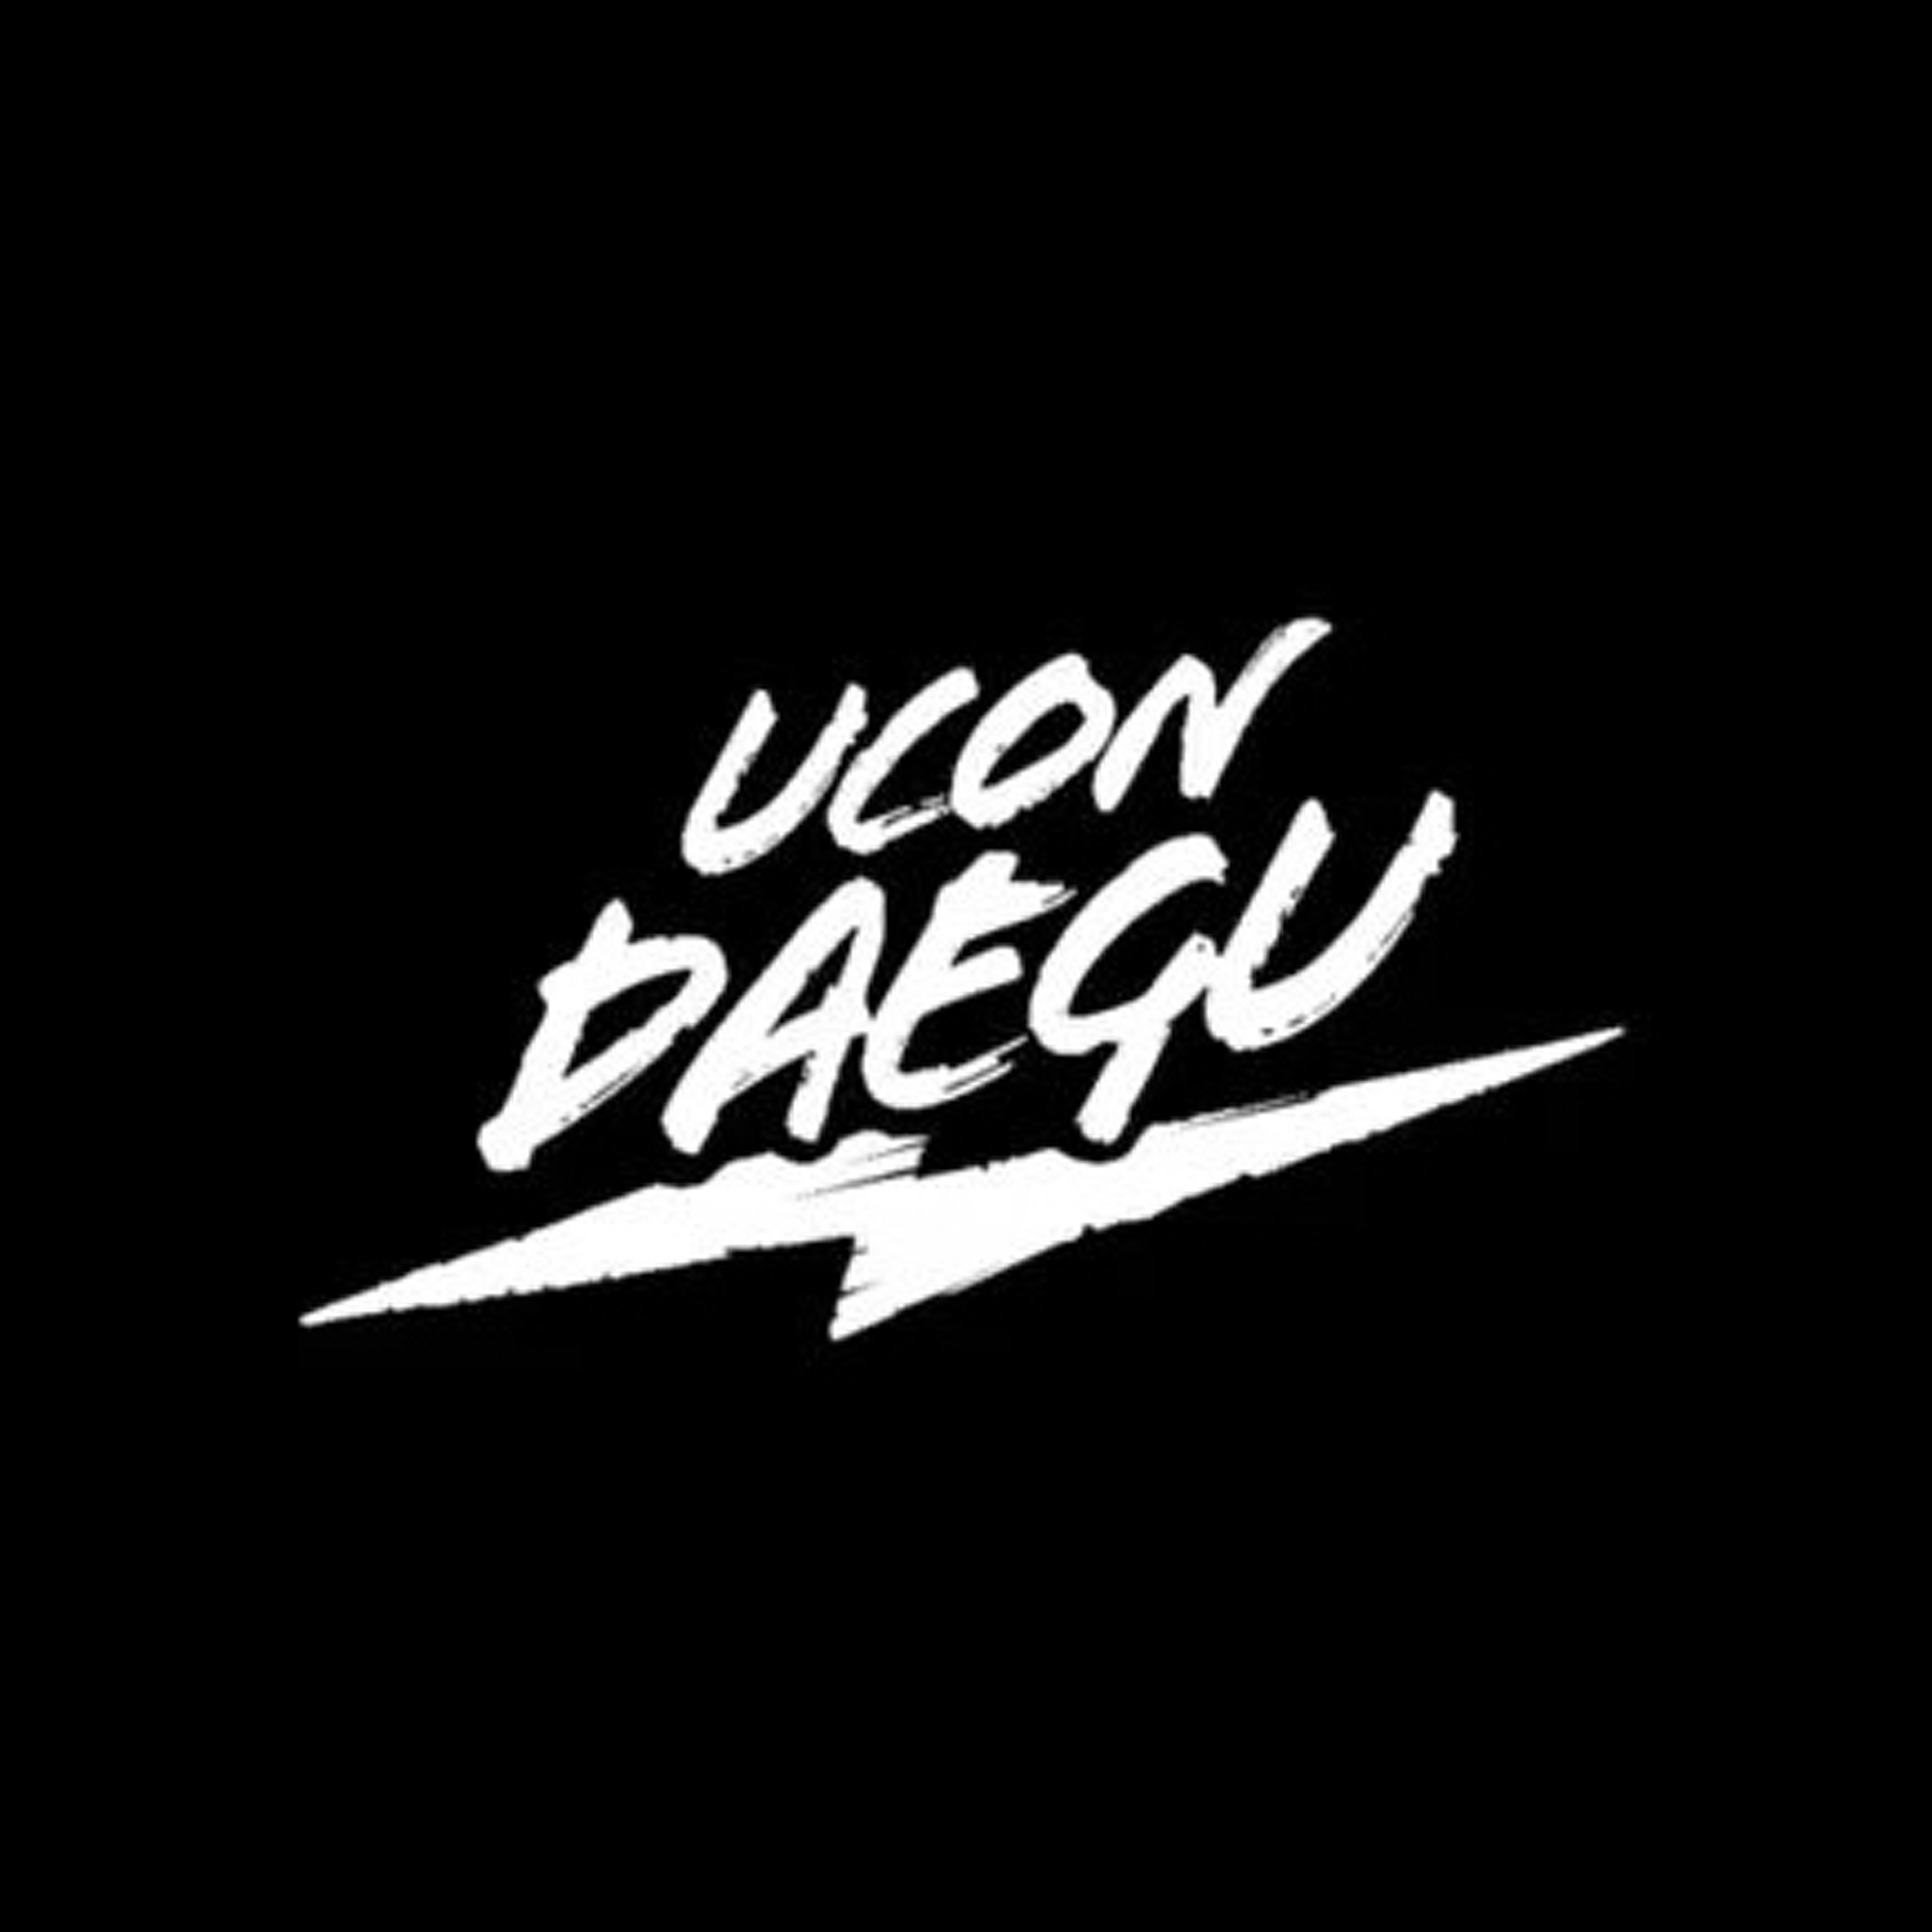 UCON Daegu Cover